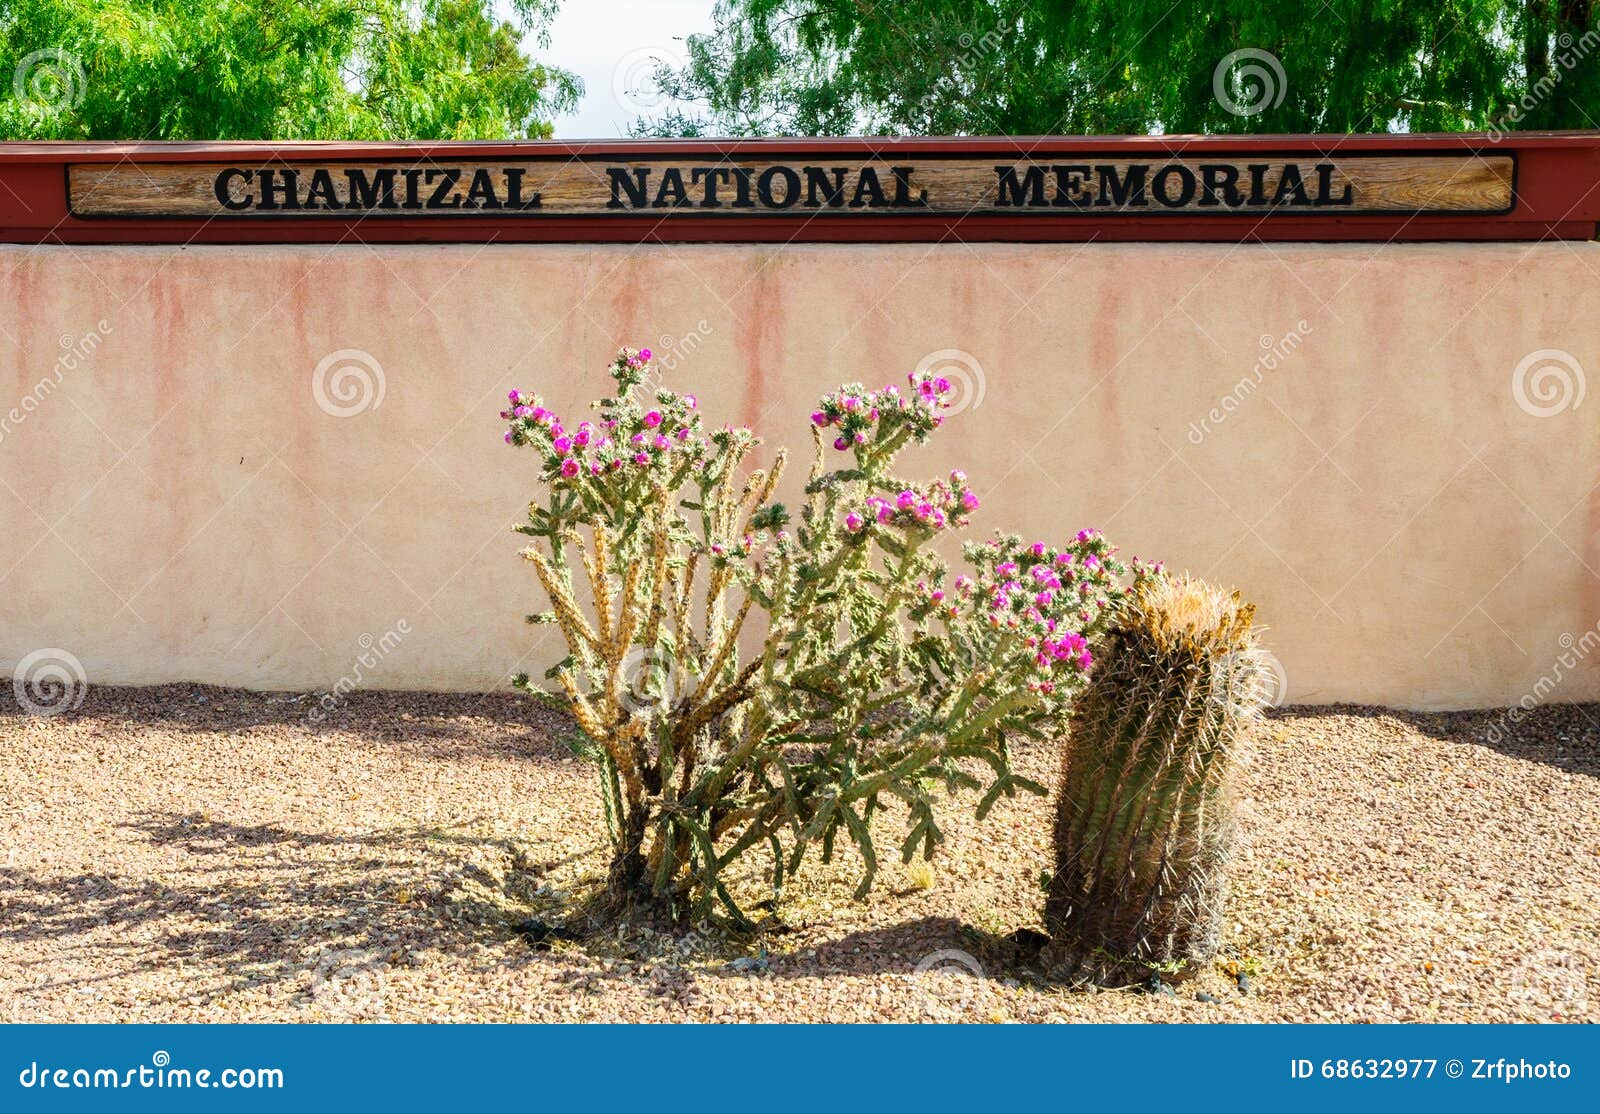 chamizal national memorial